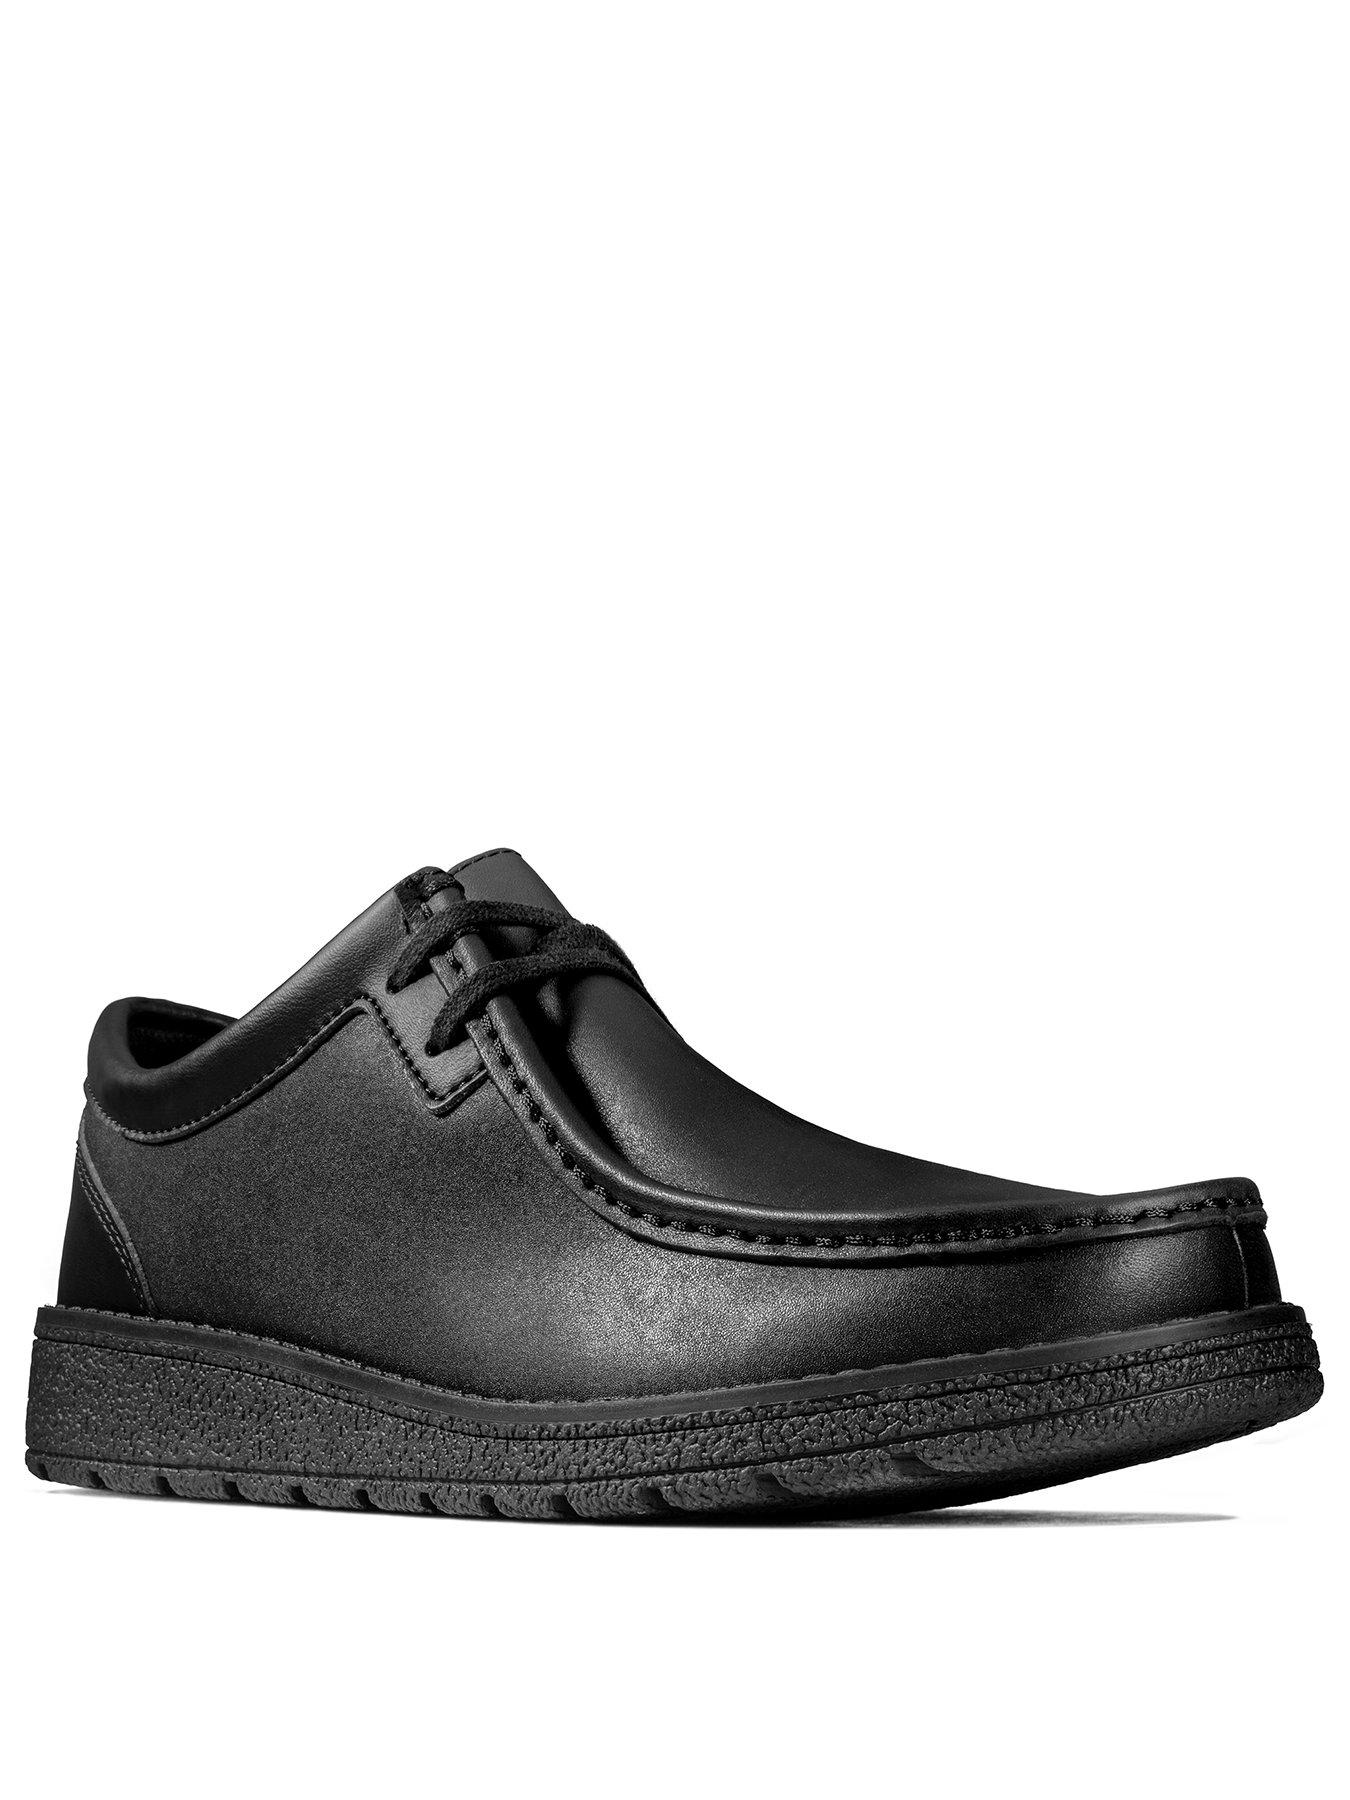 BNIB Clarks Girls Tasha Bay Black Leather School Shoes E/F/G/H Fitting 